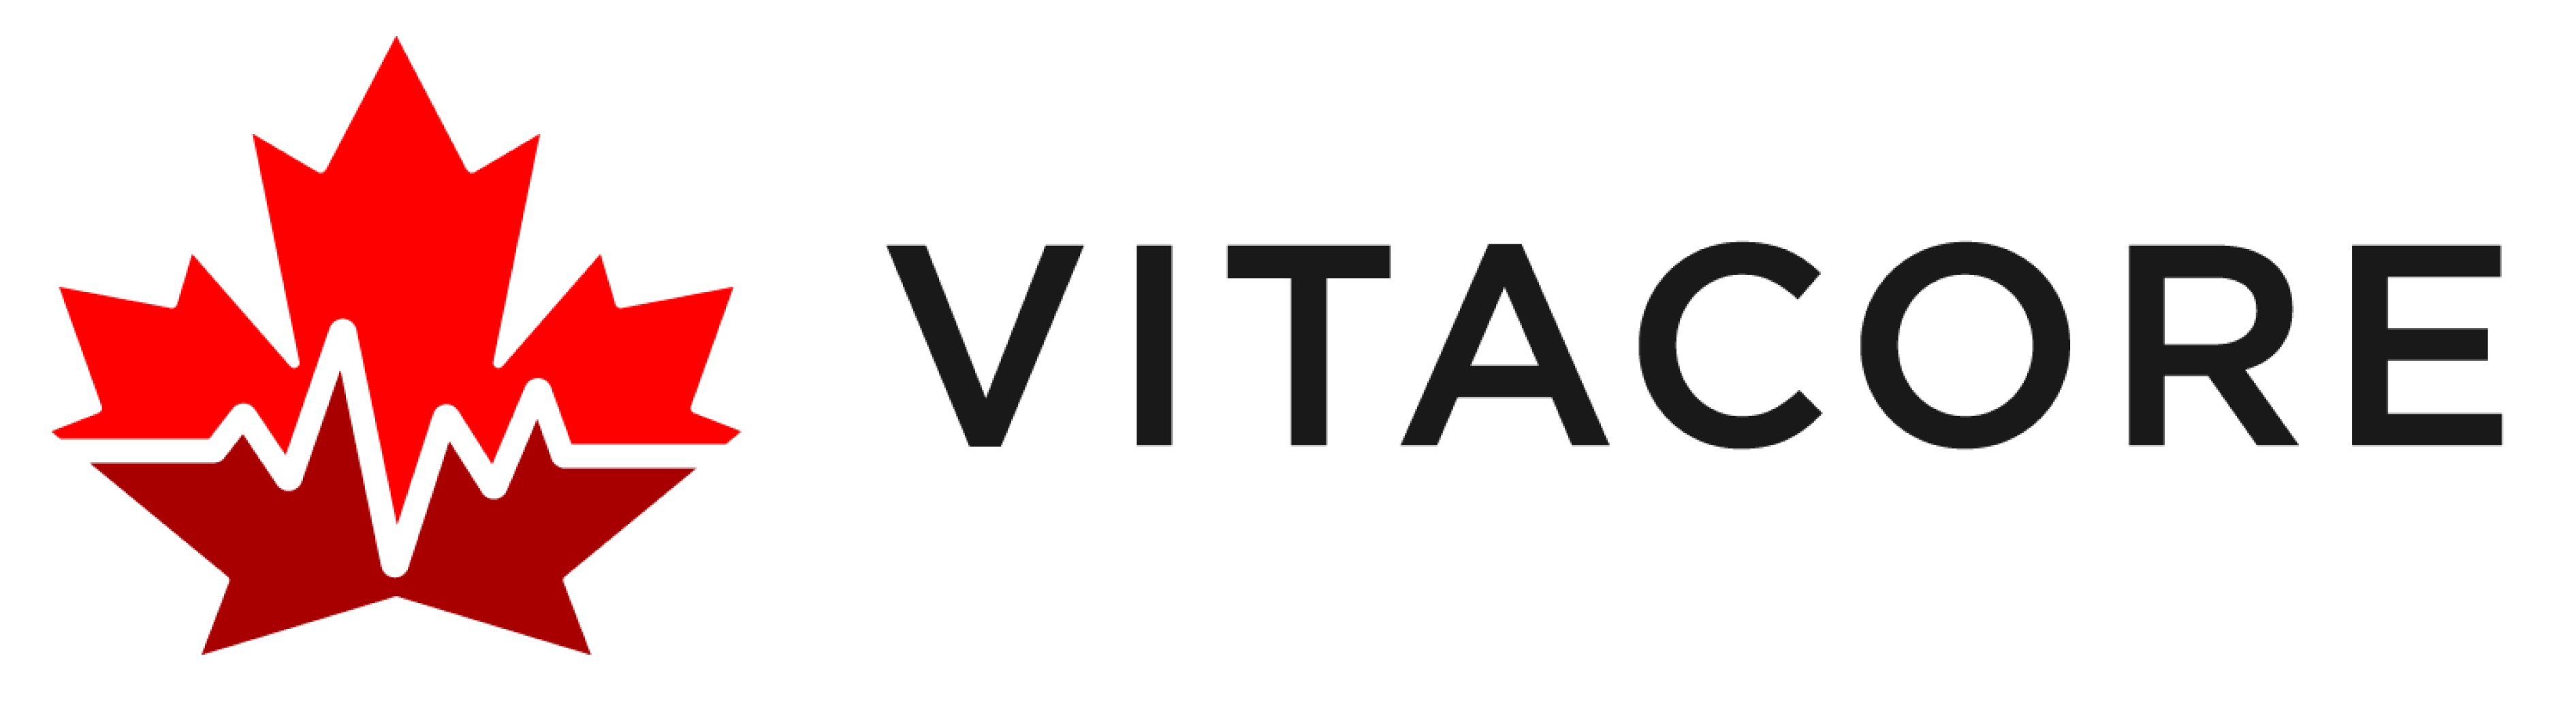 Vitacore industries logo